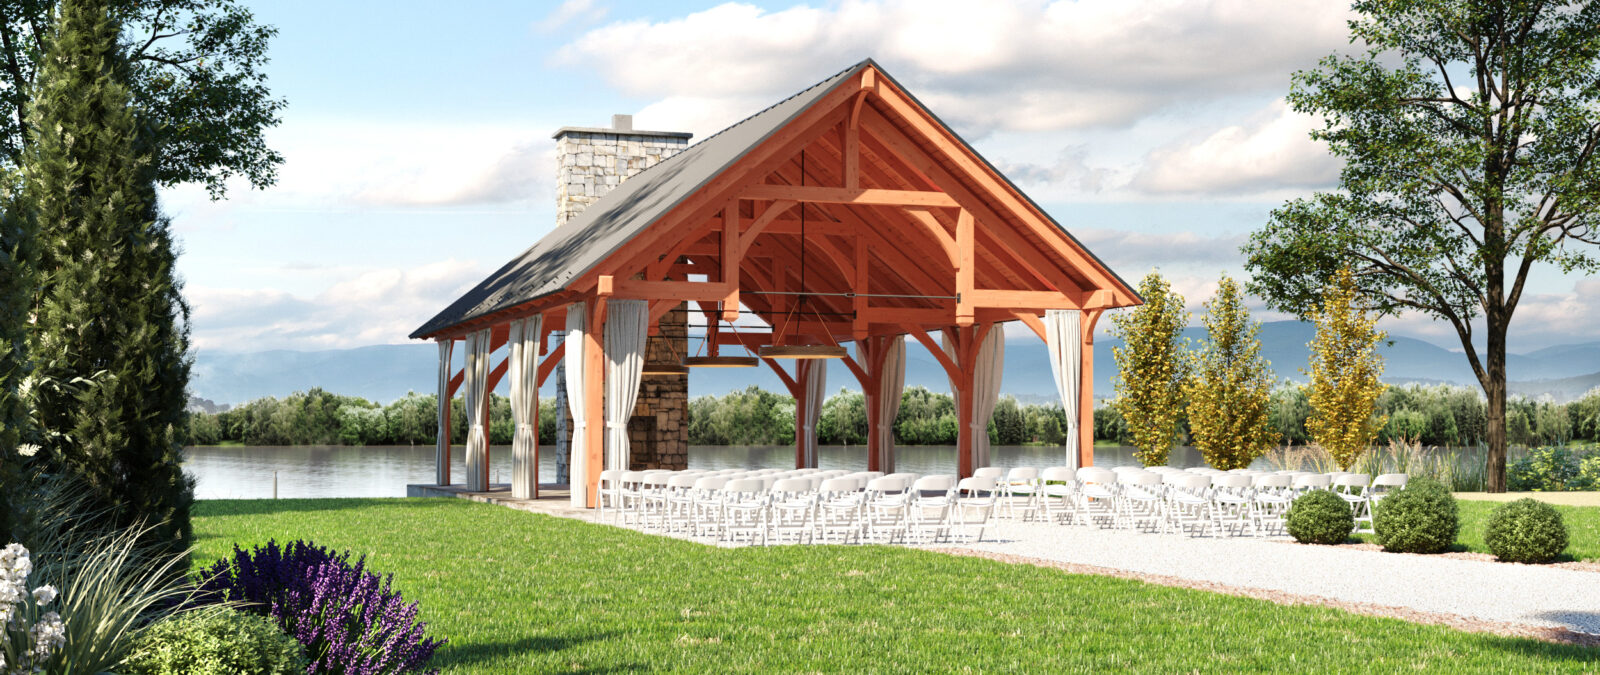 denali timber frame outdoor pavilions